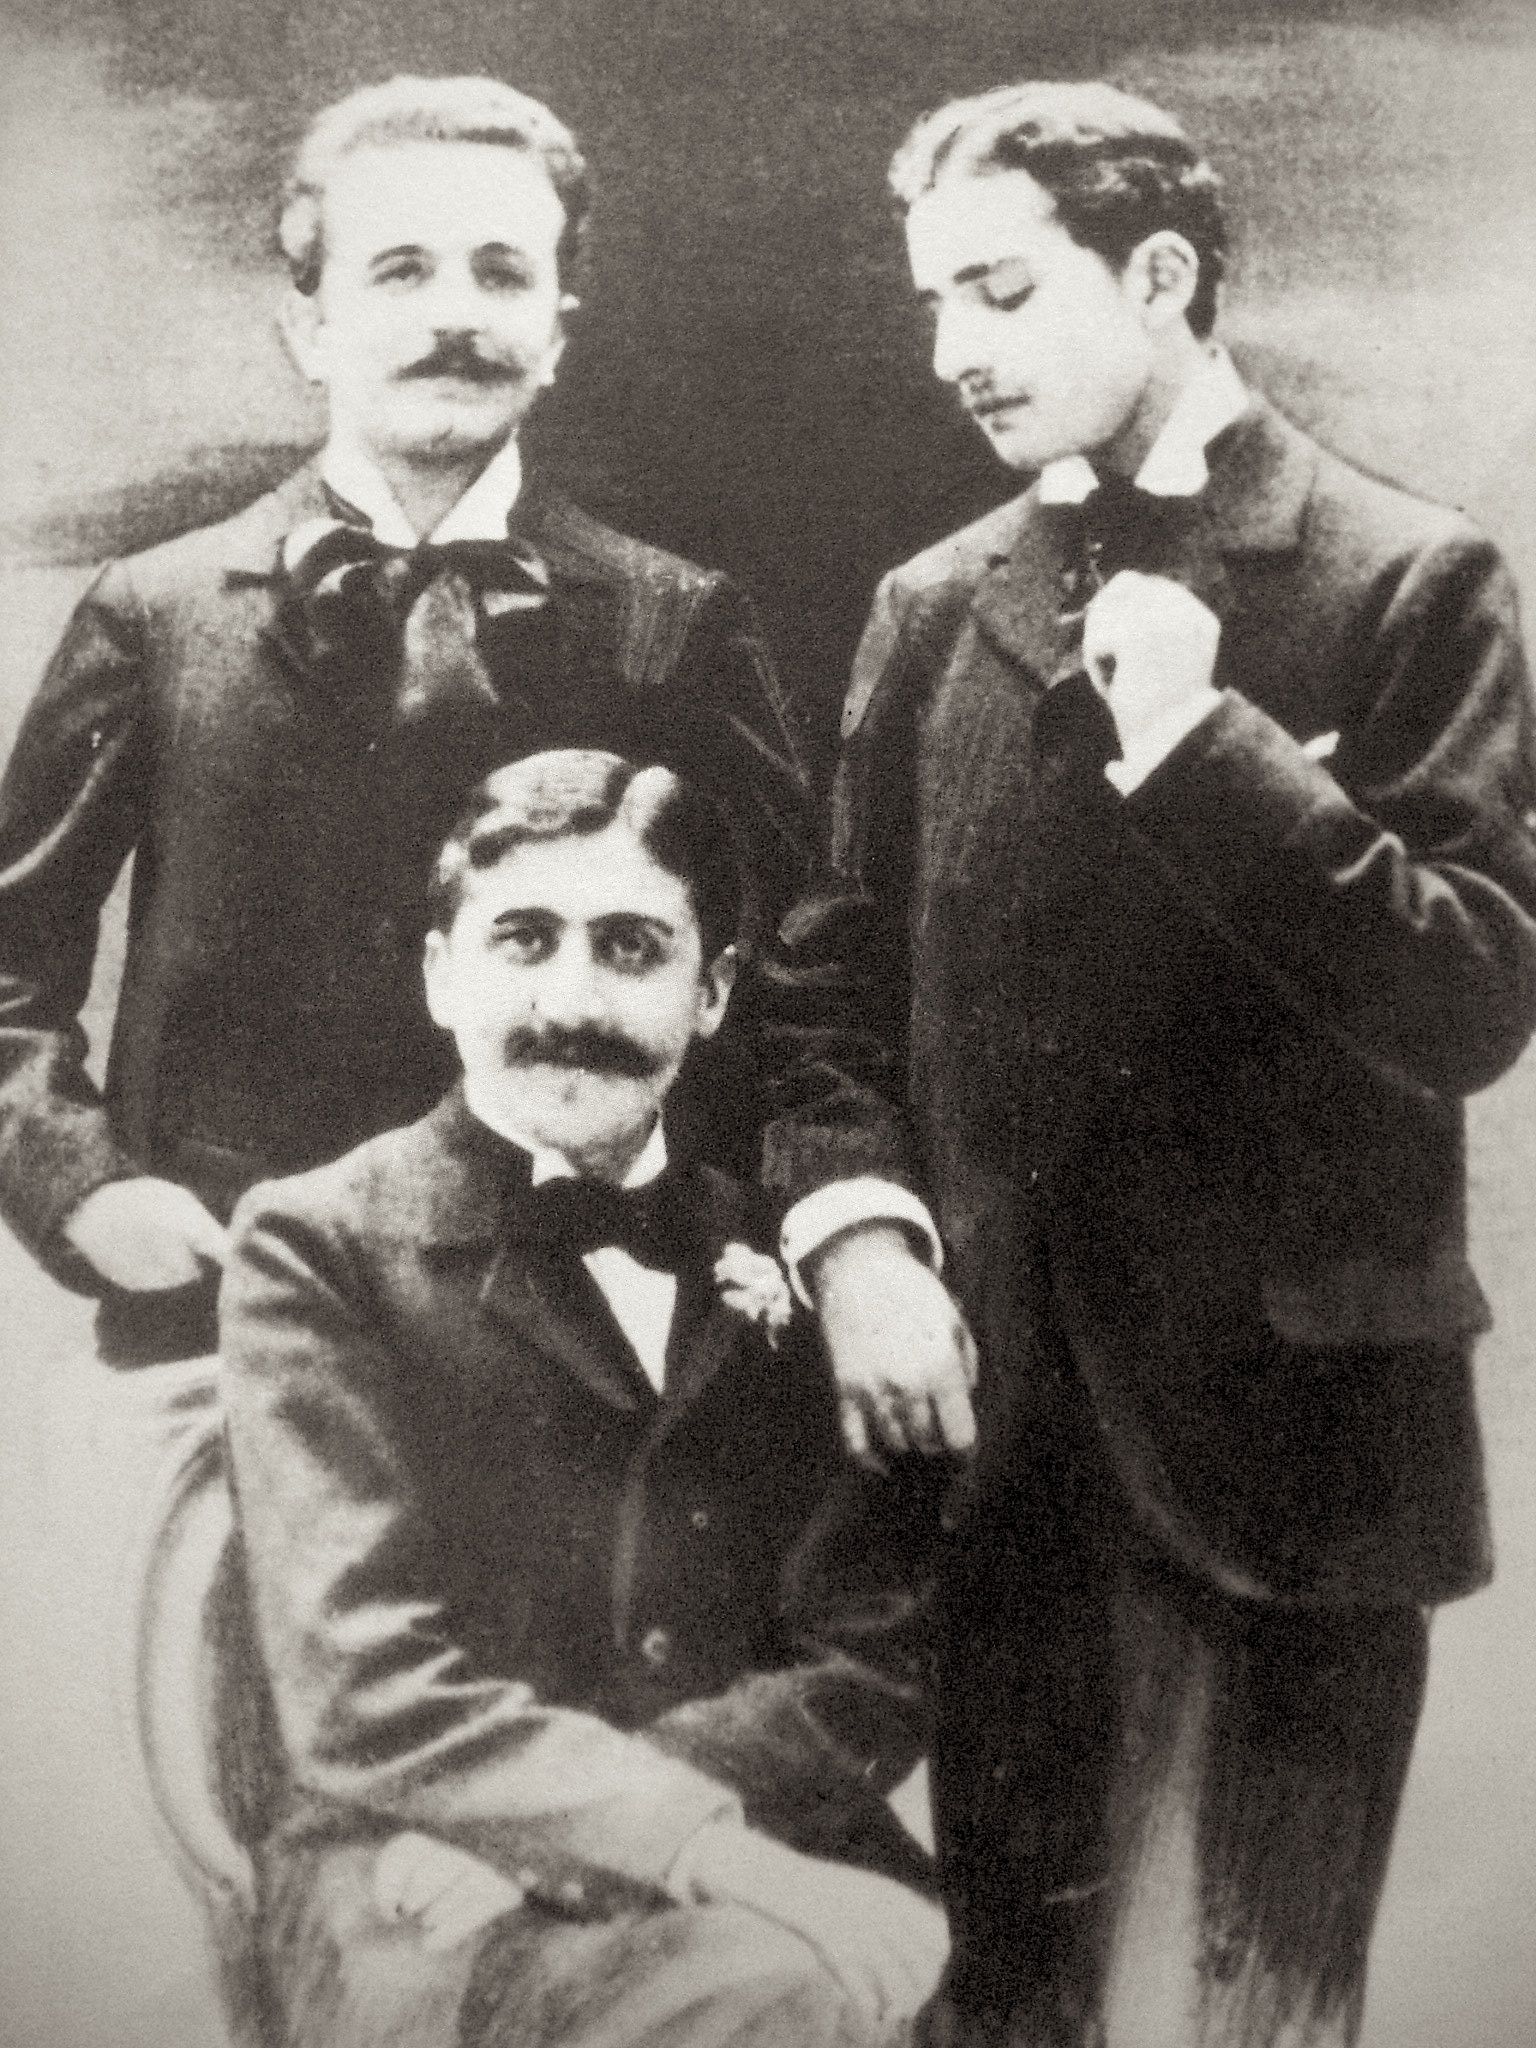 https://upload.wikimedia.org/wikipedia/commons/thumb/a/a2/Marcel_Proust_et_Lucien_Daudet.jpg/1536px-Marcel_Proust_et_Lucien_Daudet.jpg